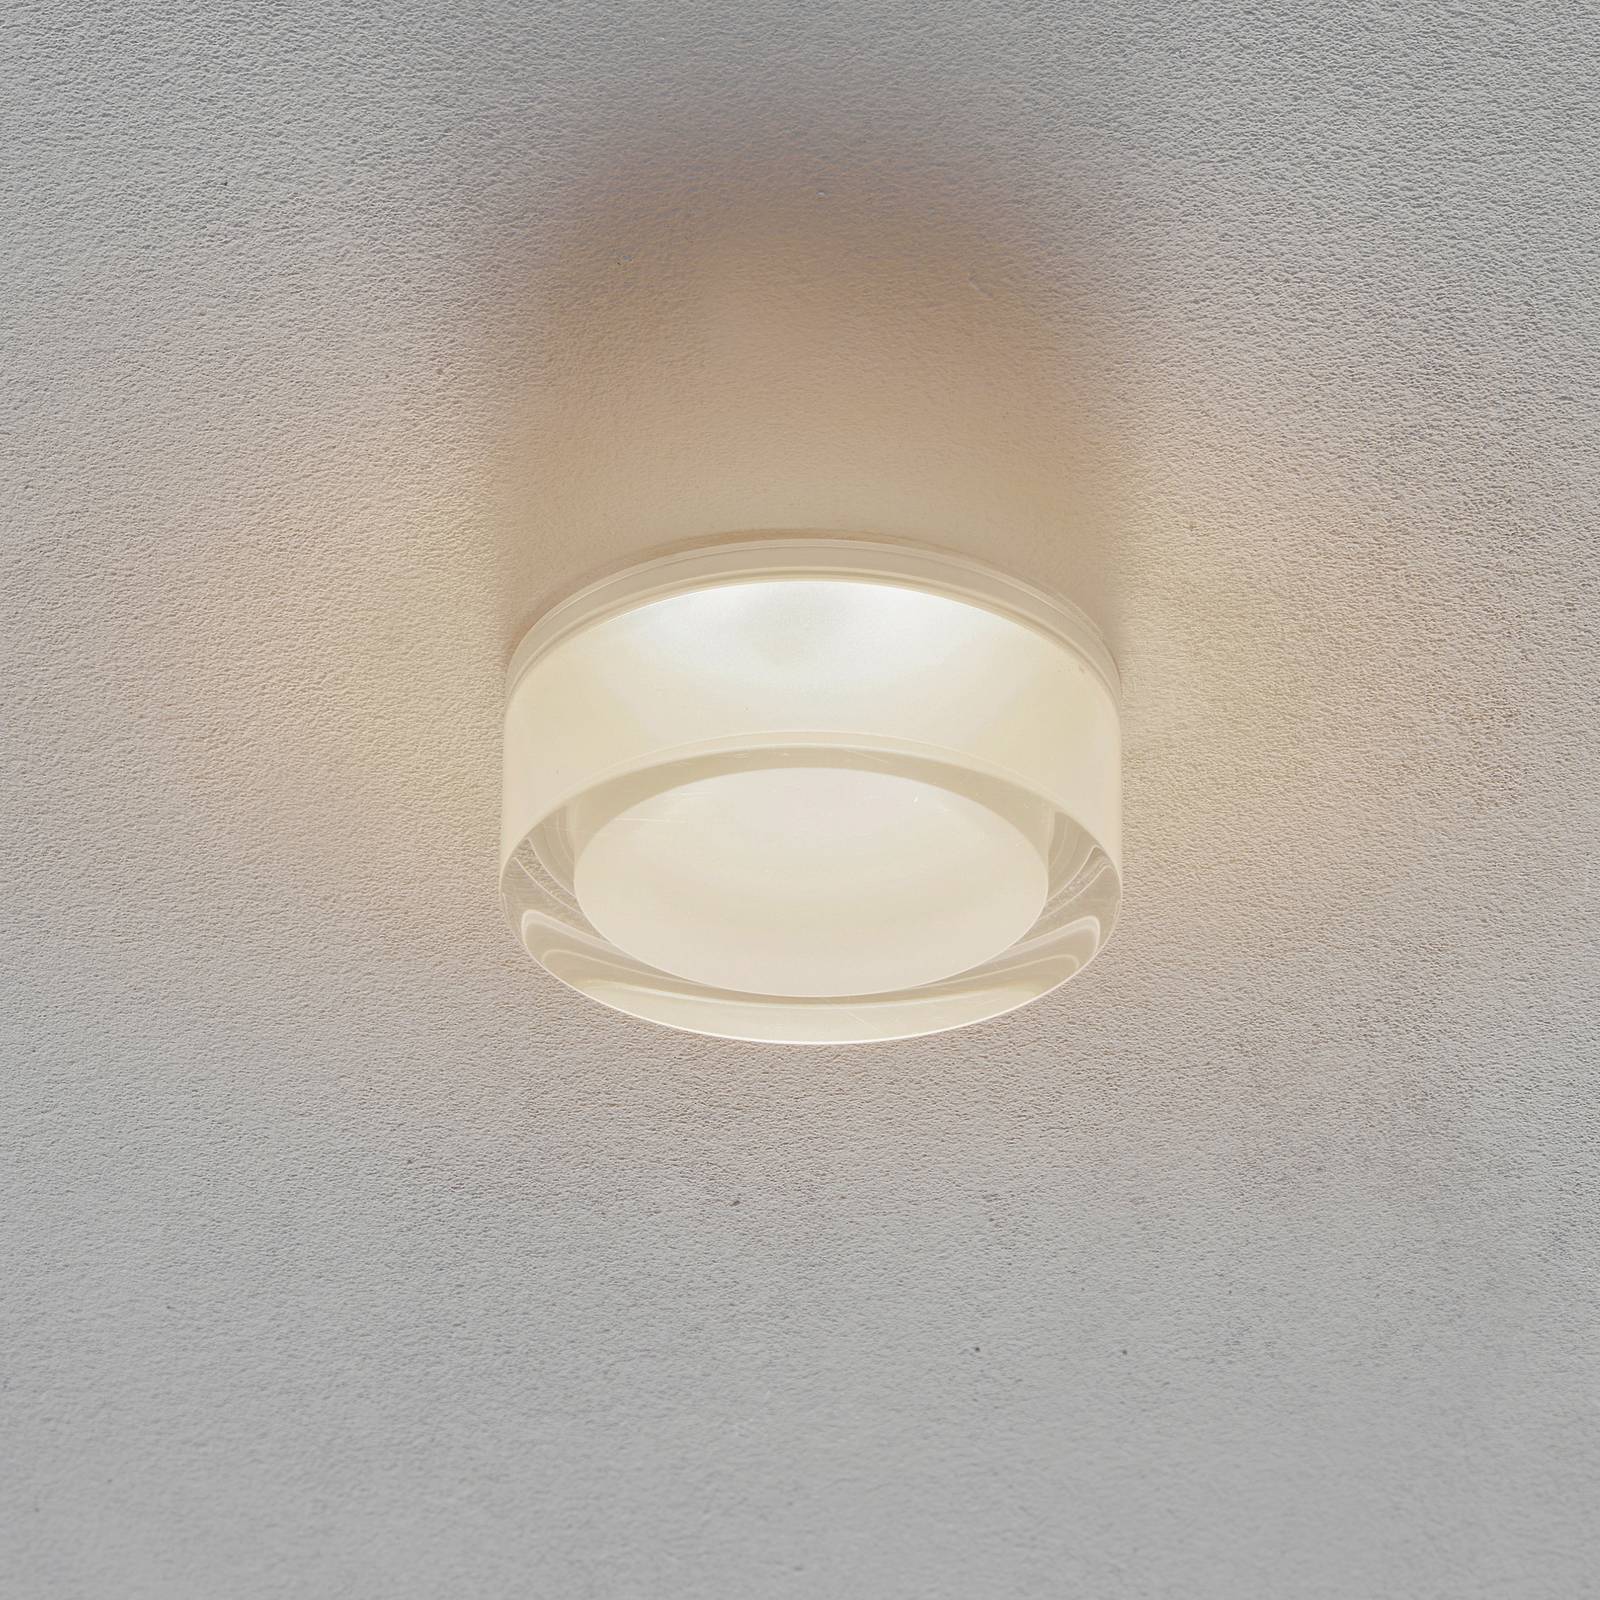 WEVER & DUCRÉ Mirbi IP44 1.0 LED-Einbaulampe rund von Wever & Ducré Lighting